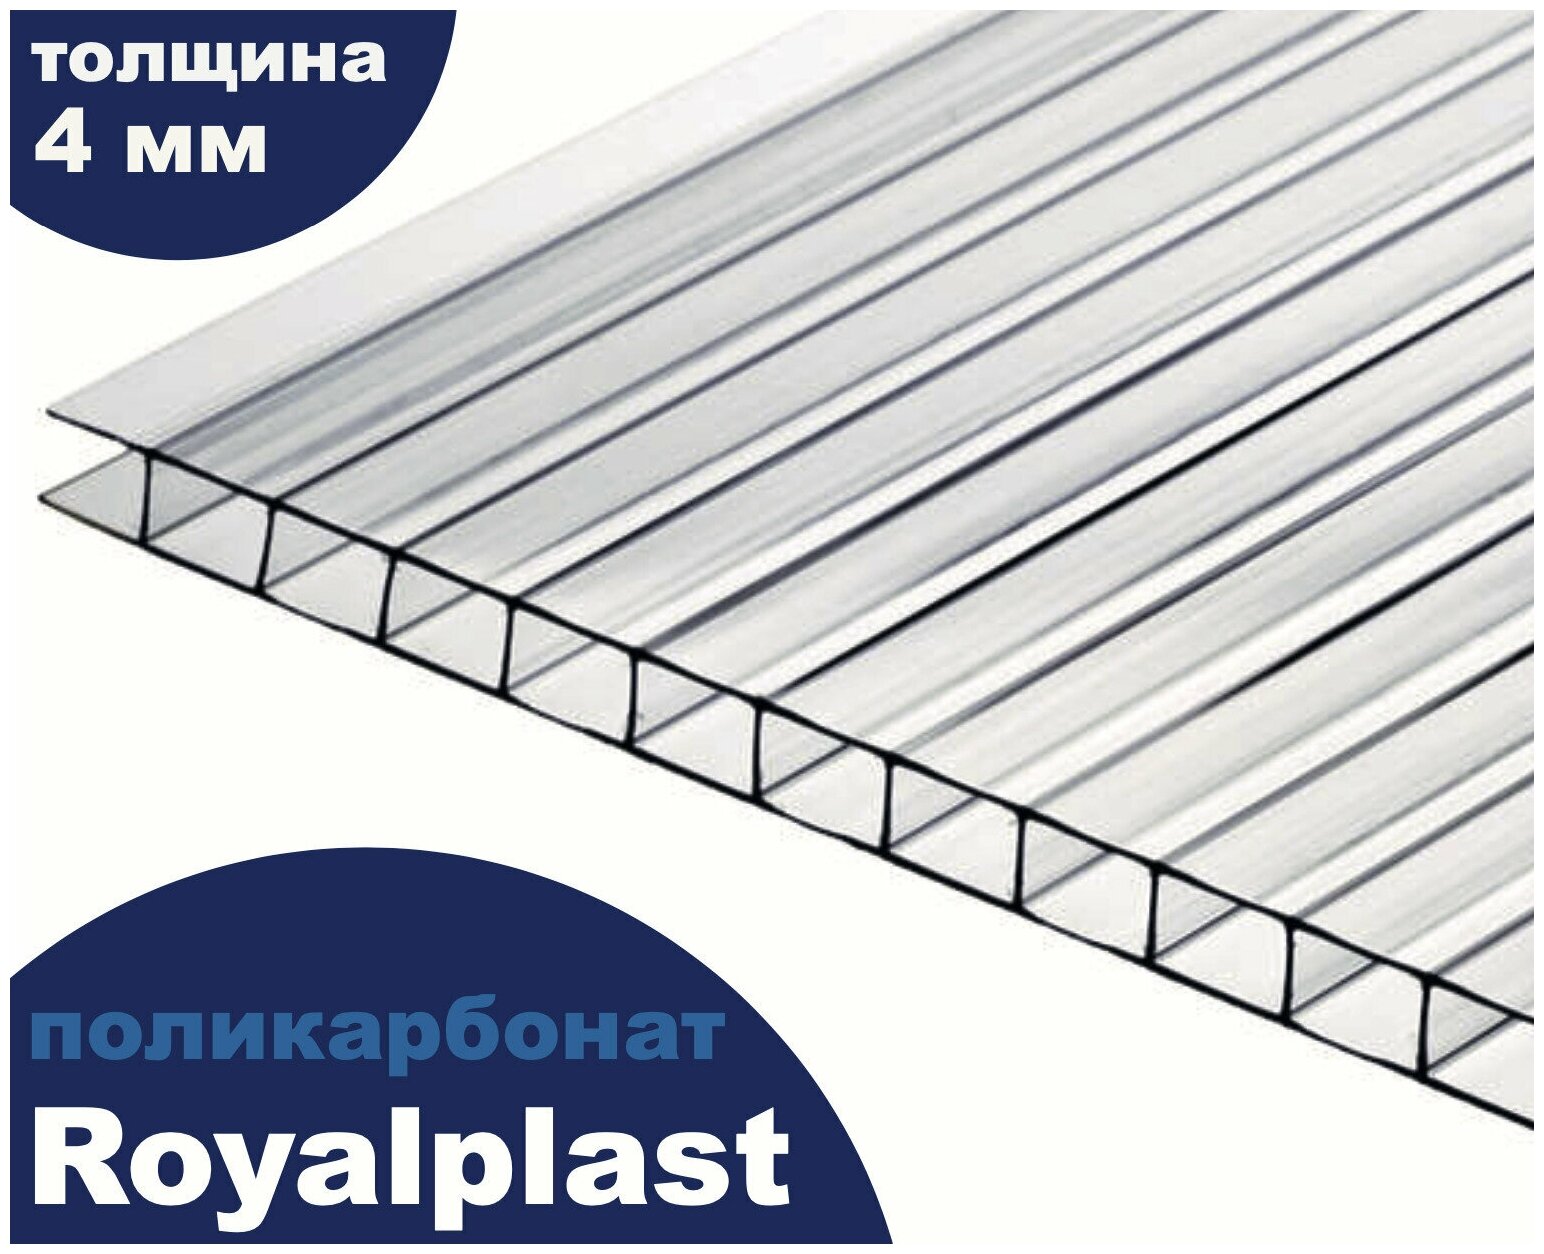 Премиум поликарбонат прозрачный, Royalplast, 4 мм, 6 метров, 2 листа